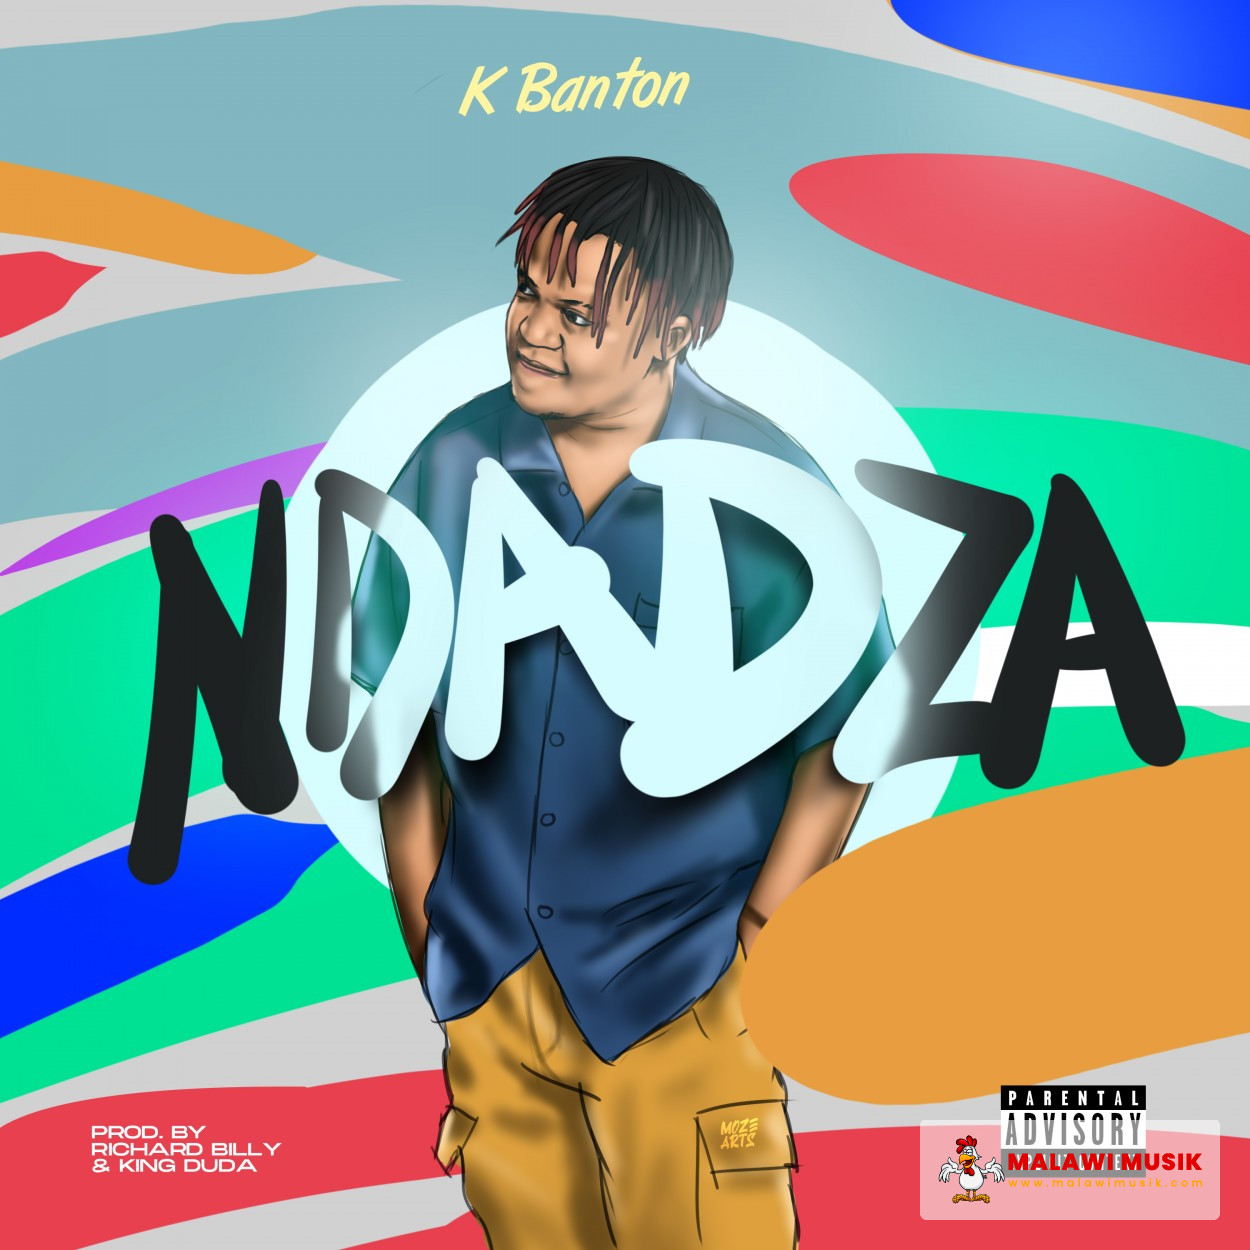 K Banton-K Banton - Ndadza (Prod. Richard Billy & King Duda)-song artwork cover